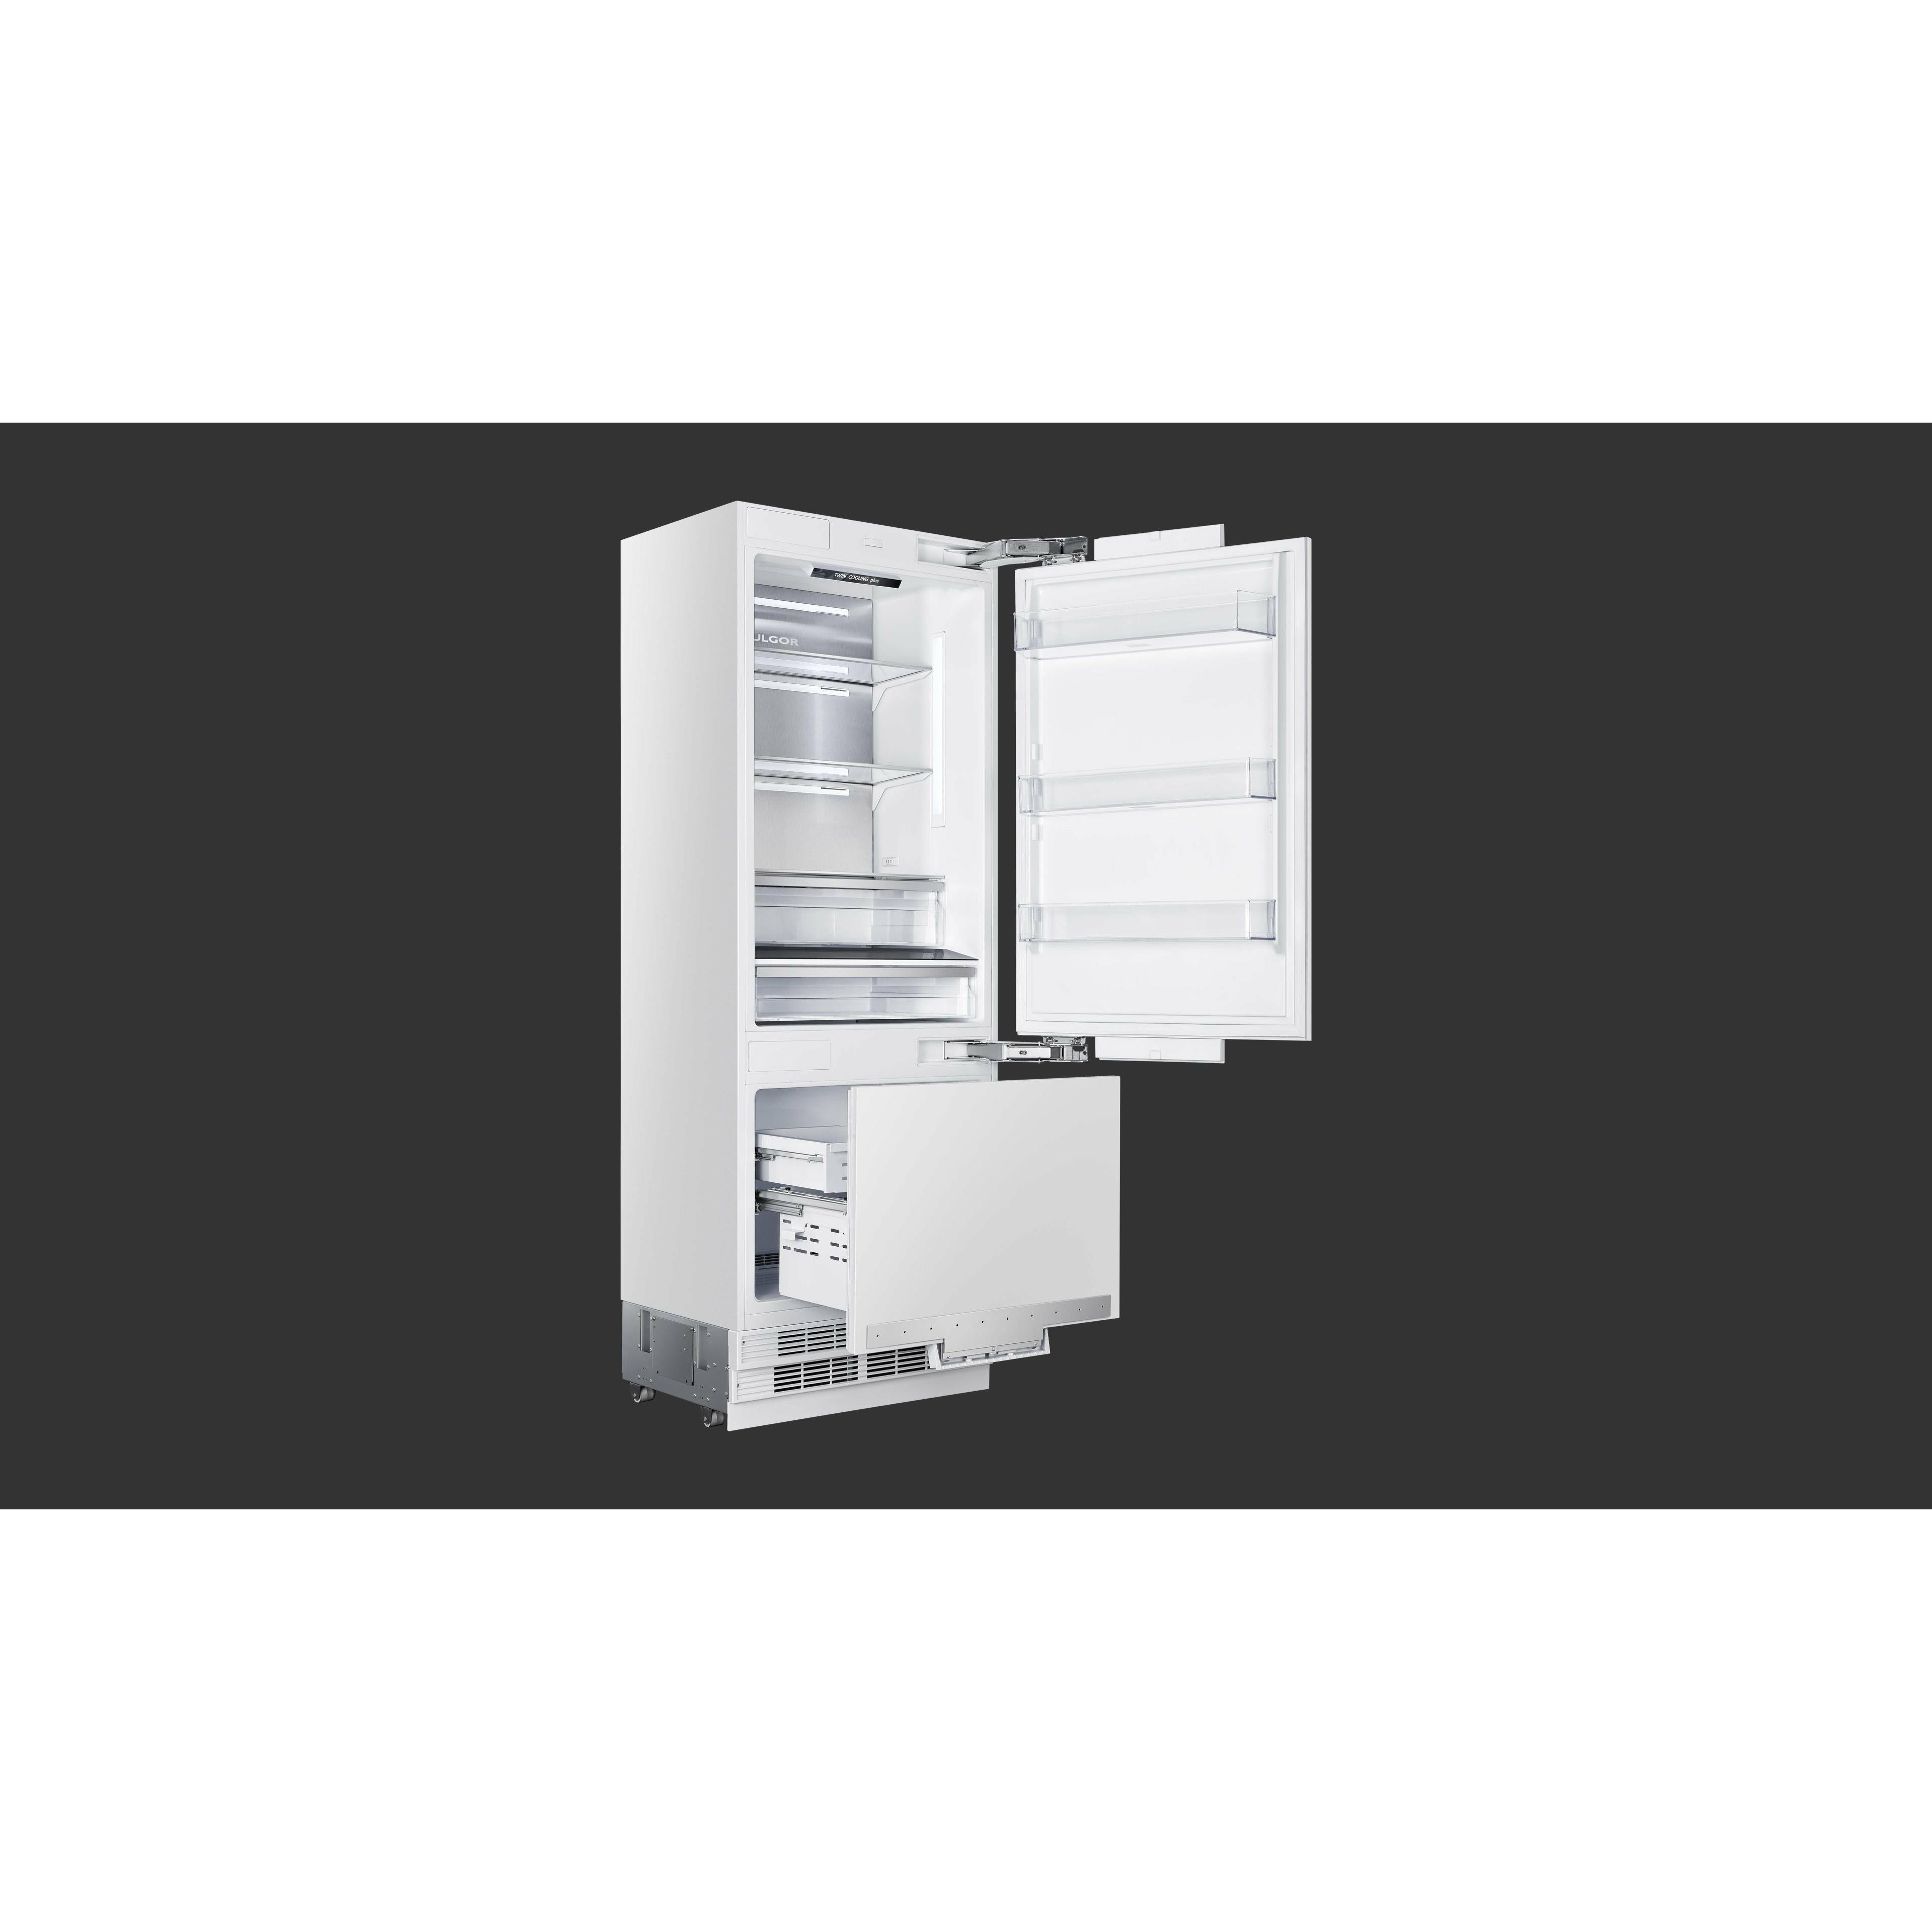 Fulgor Milano 30" Built-In Panel Ready Bottom Mount Refrigerator with 16.0 cu.ft. Capacity - FM4BM30FBI